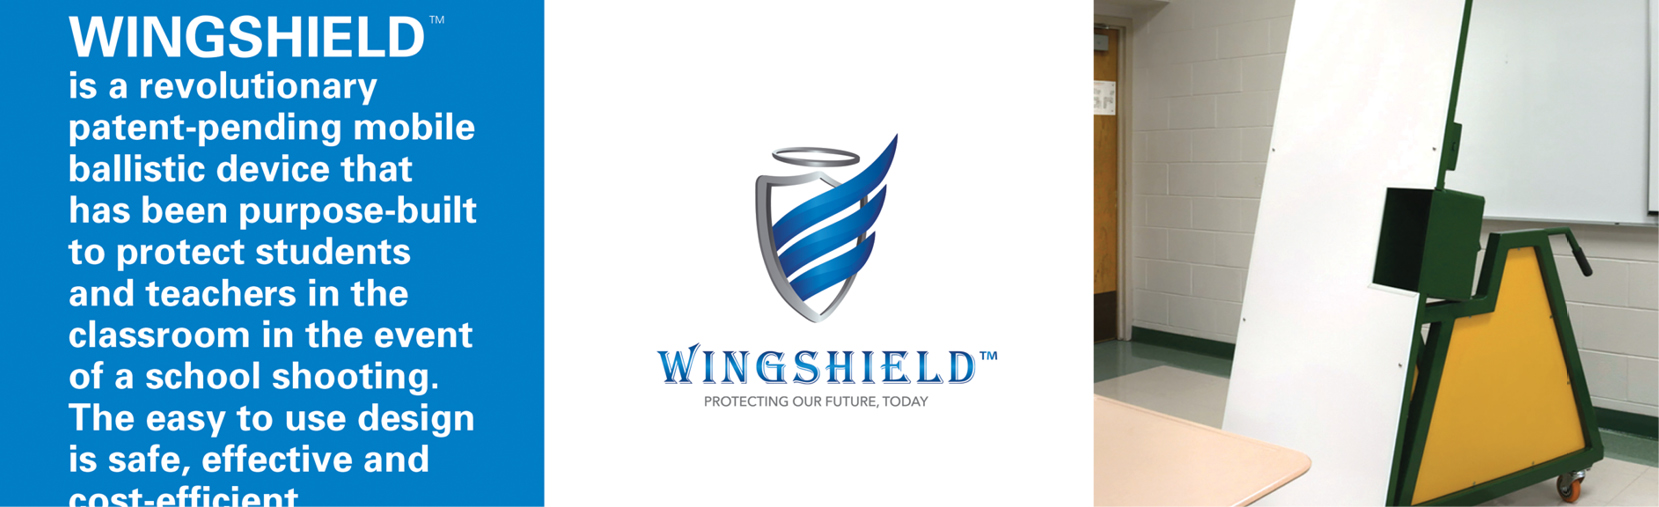 Wingshield Marketing materials